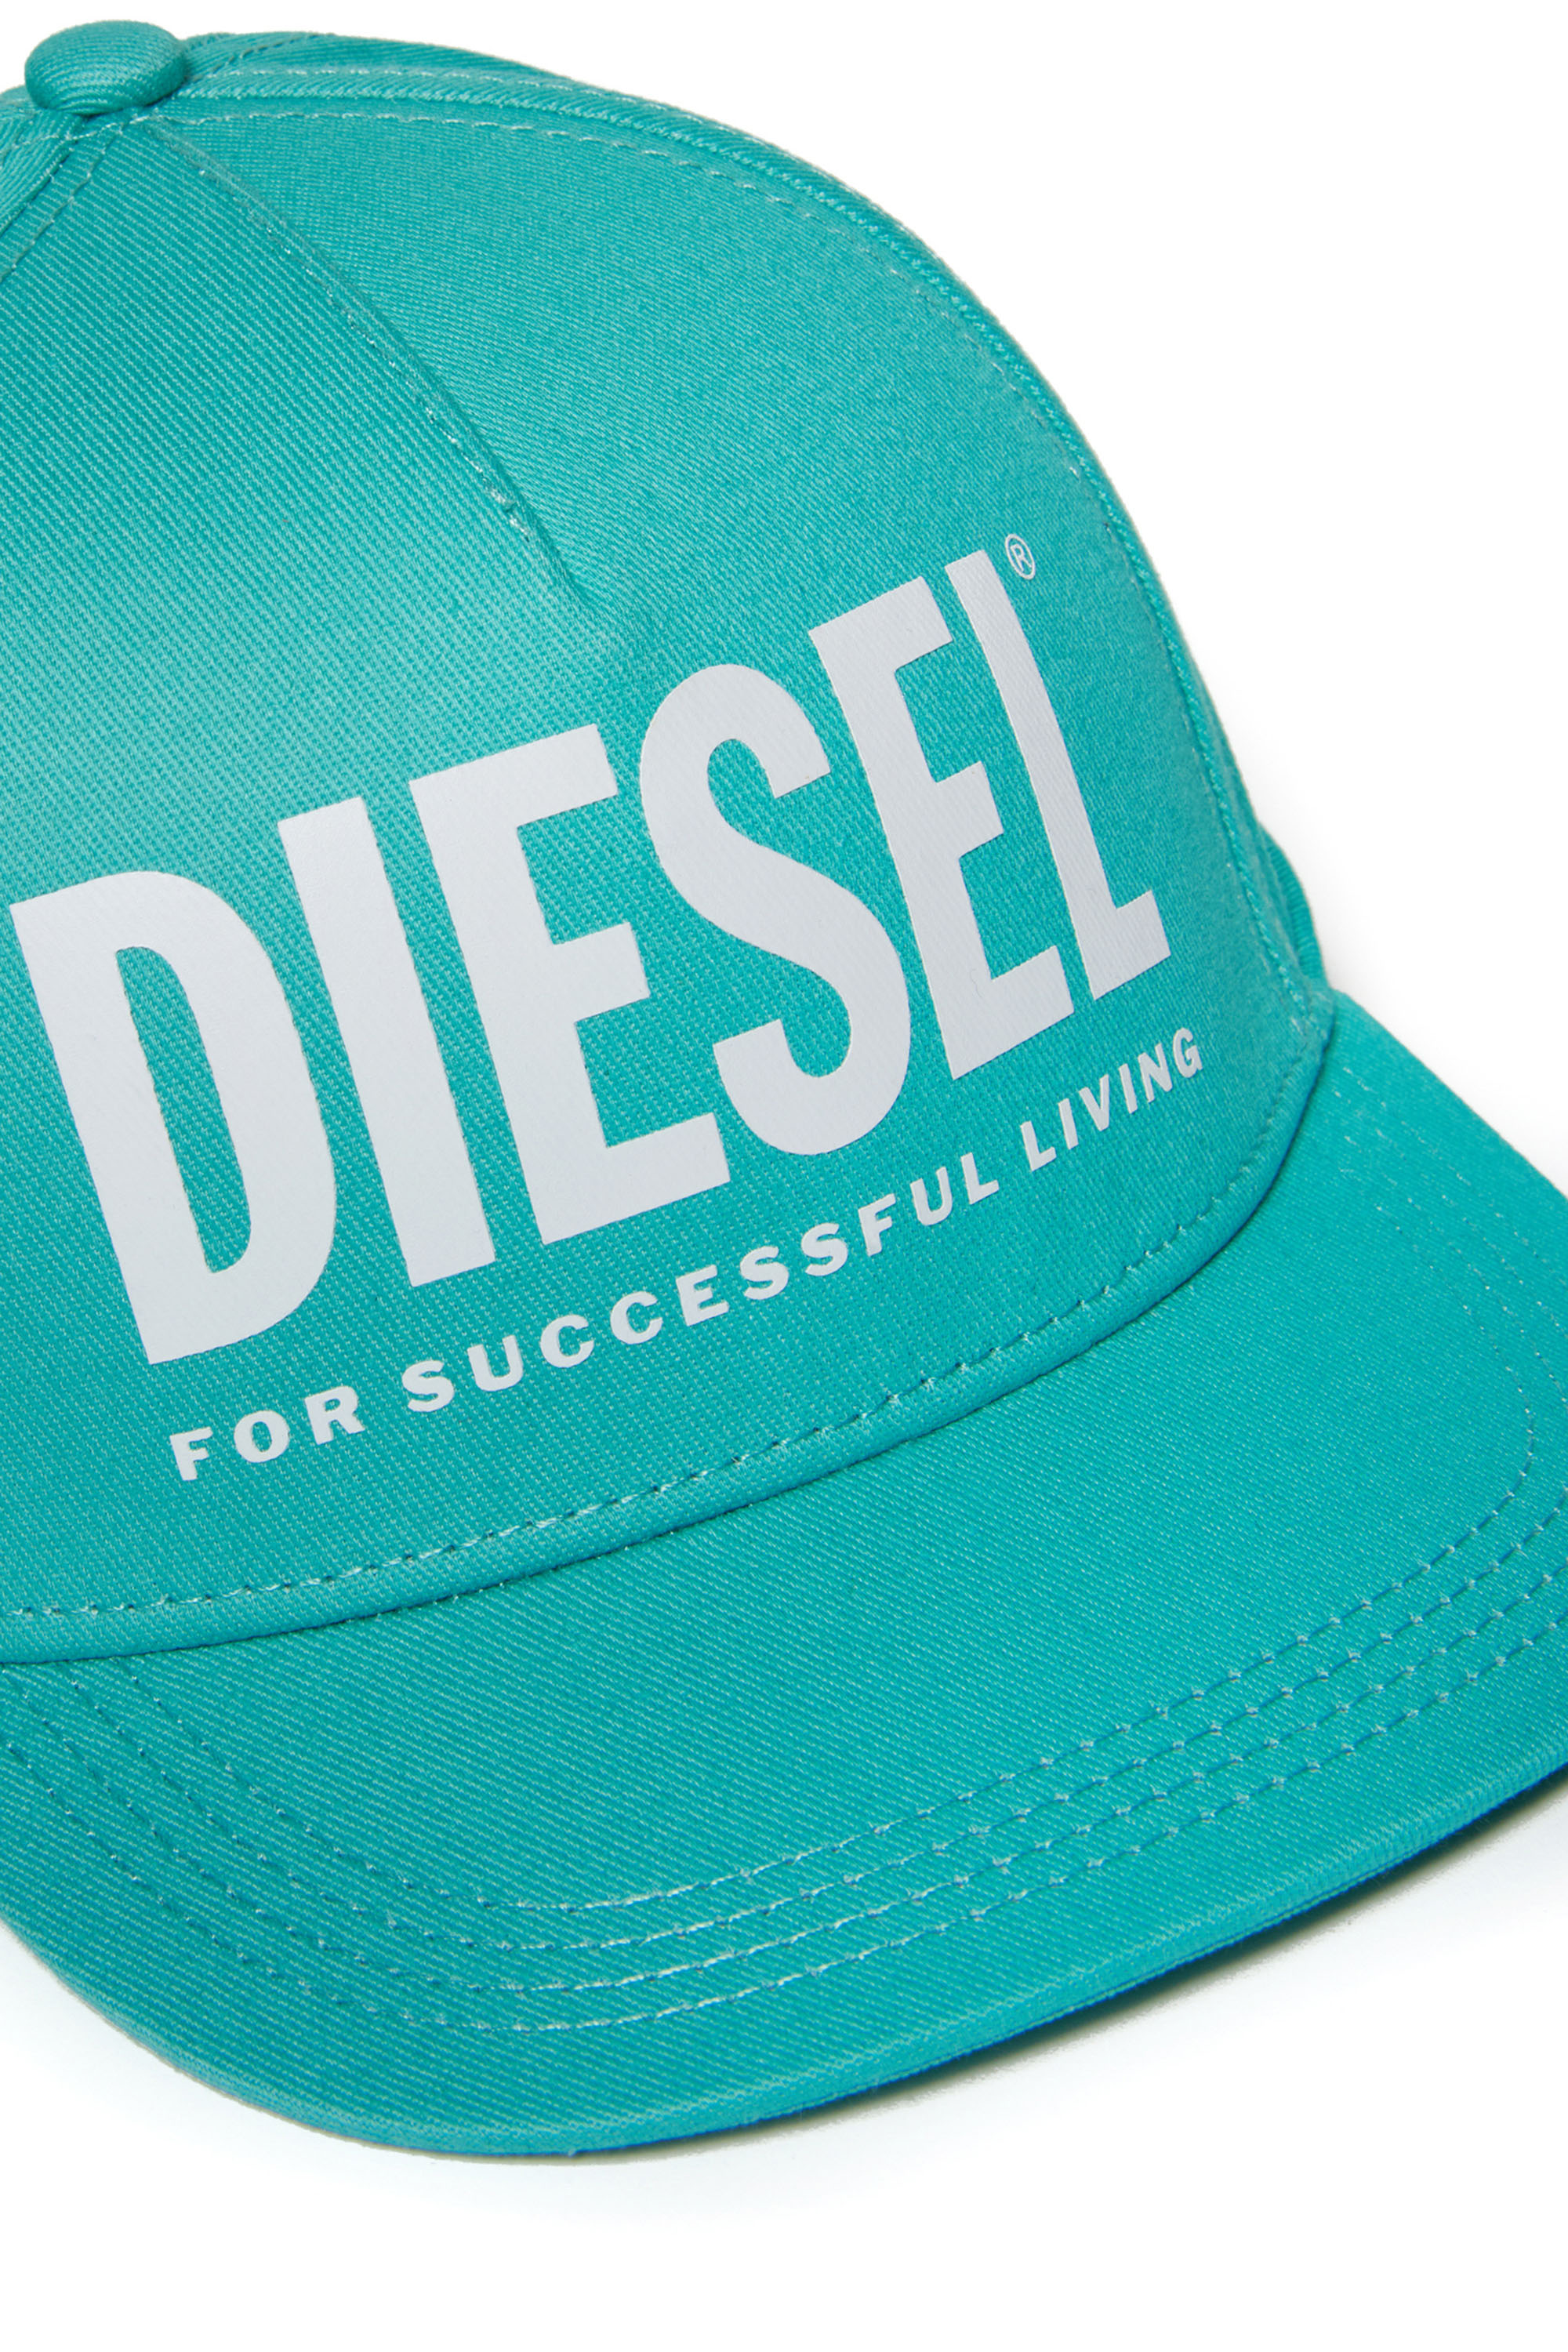 Diesel - FOLLY, Green - Image 3